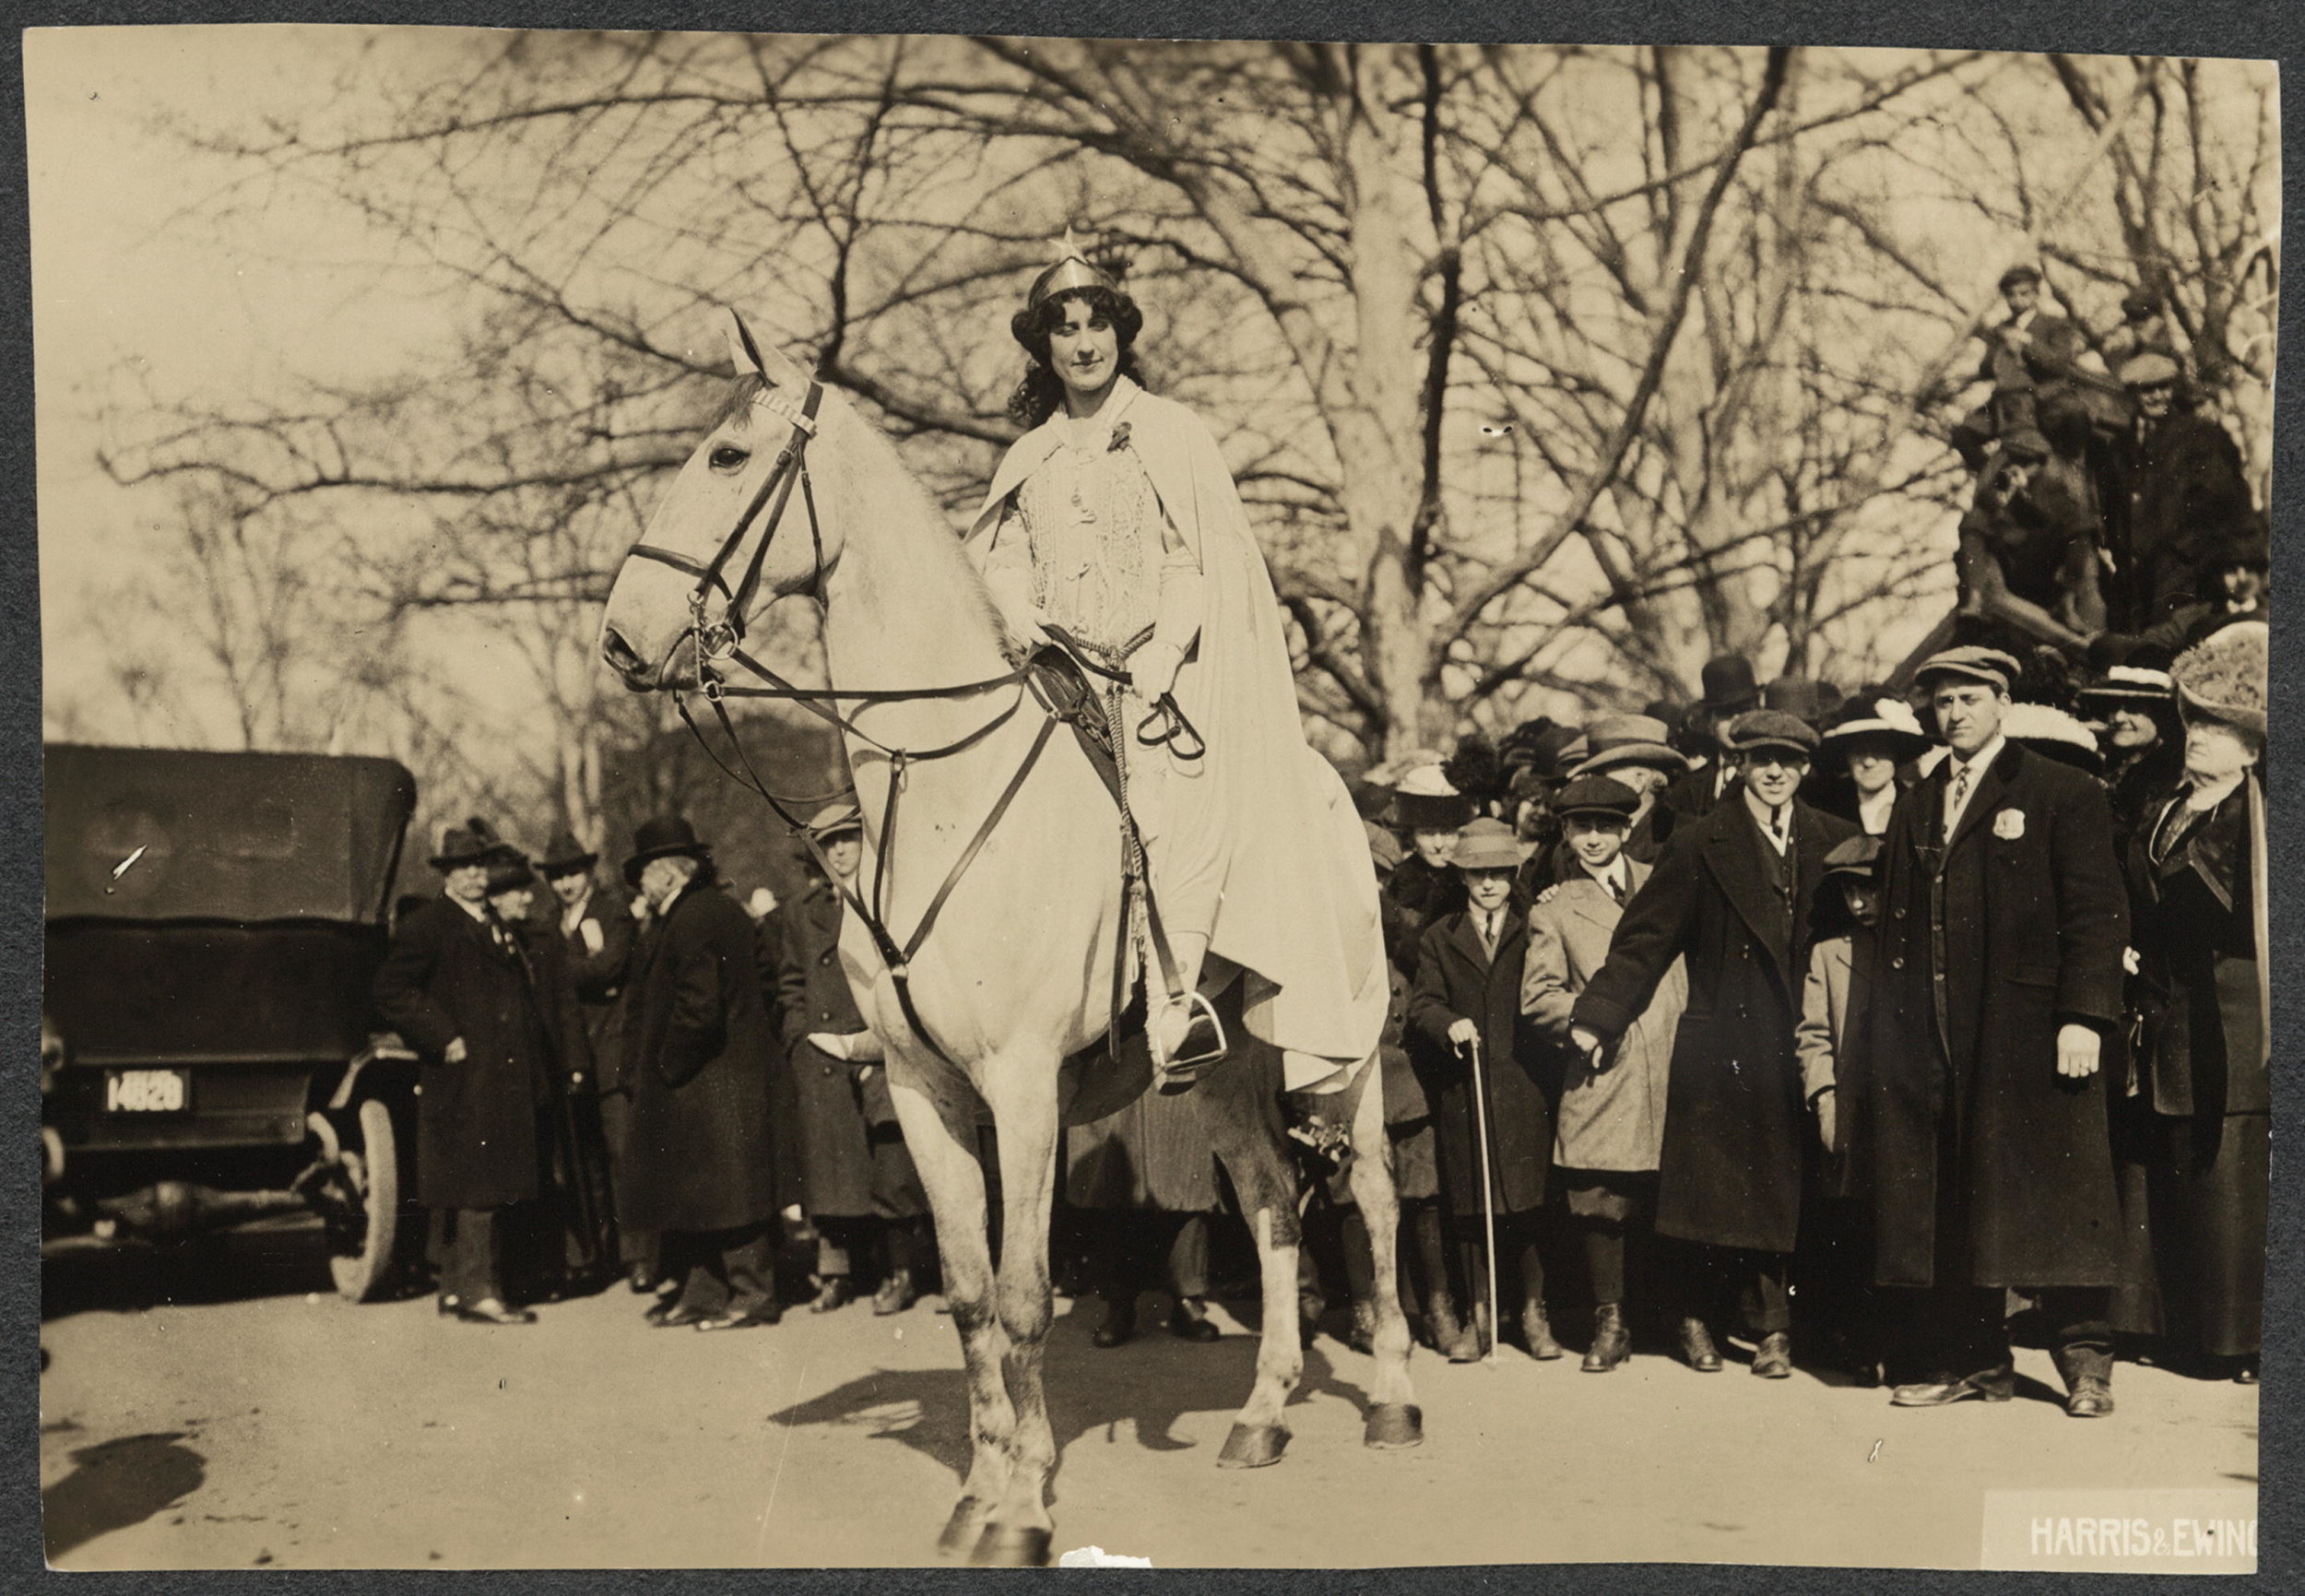   Inez Milholland Boissevain preparing to lead the March 3, 1913, suffrage parade in Washington, D.C.  